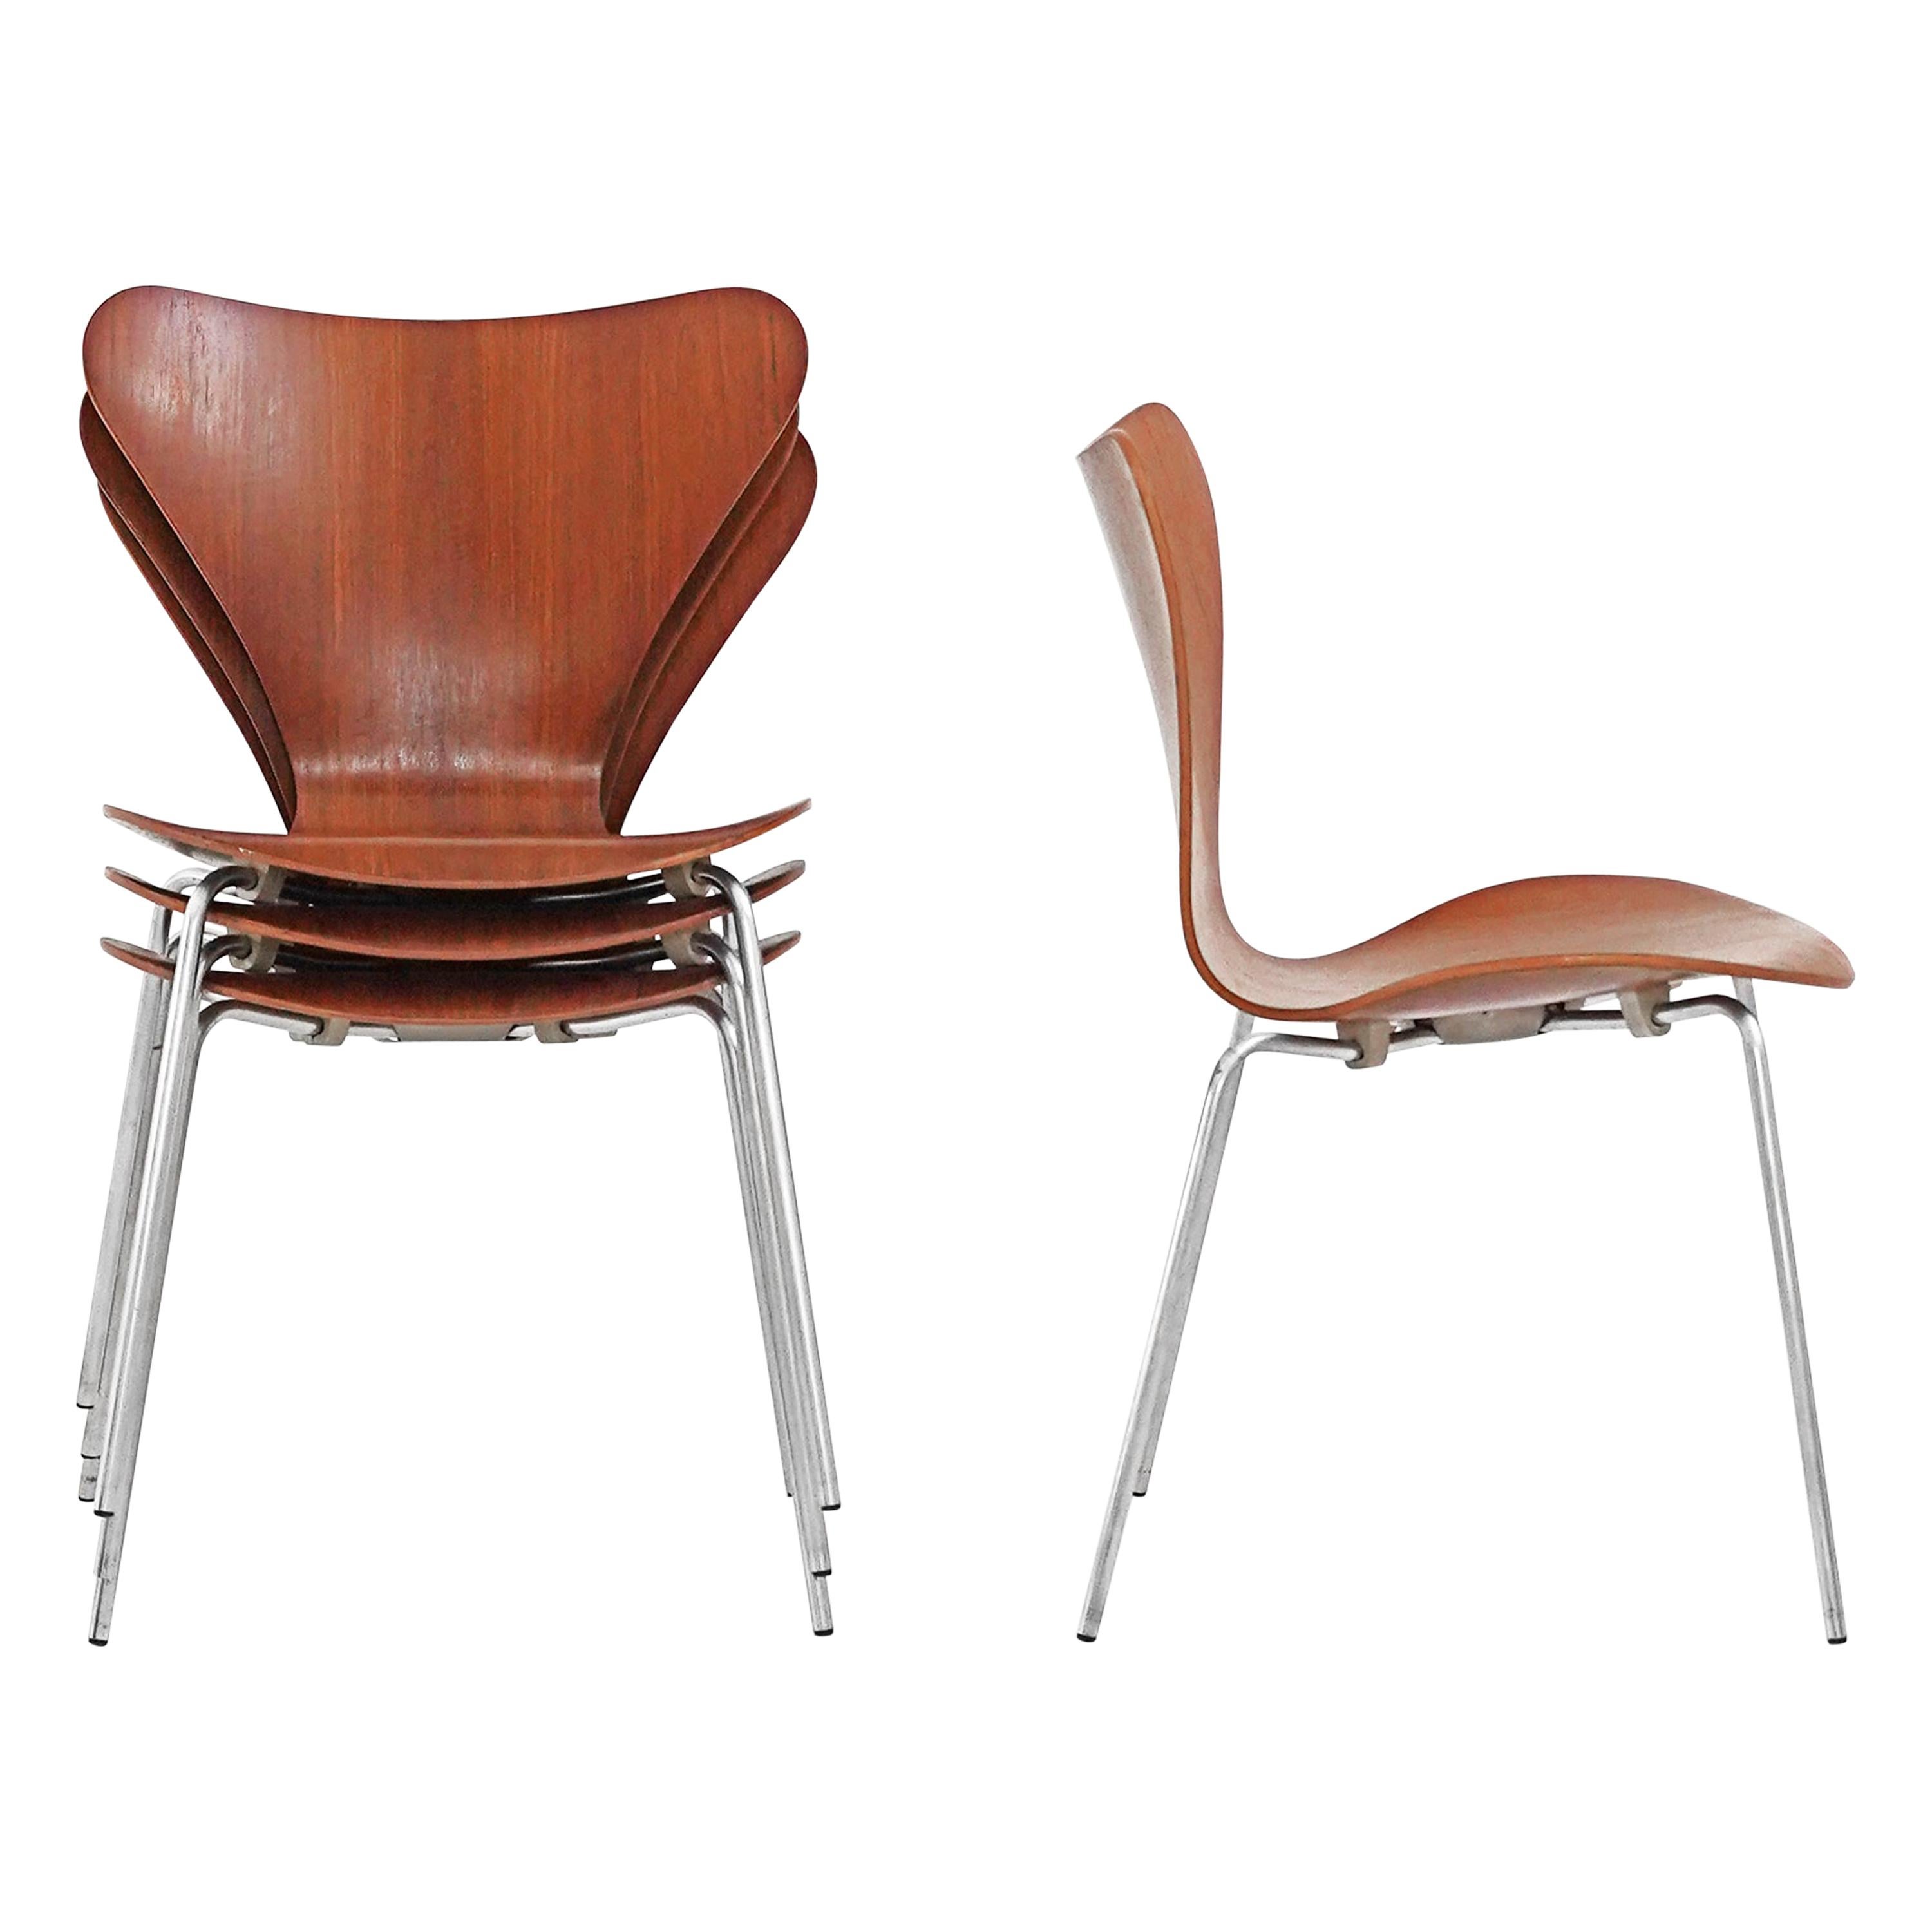 Set of 4 Series 7 Butterfly Chairs in Teak by Arne Jacobsen for Fritz Hansen